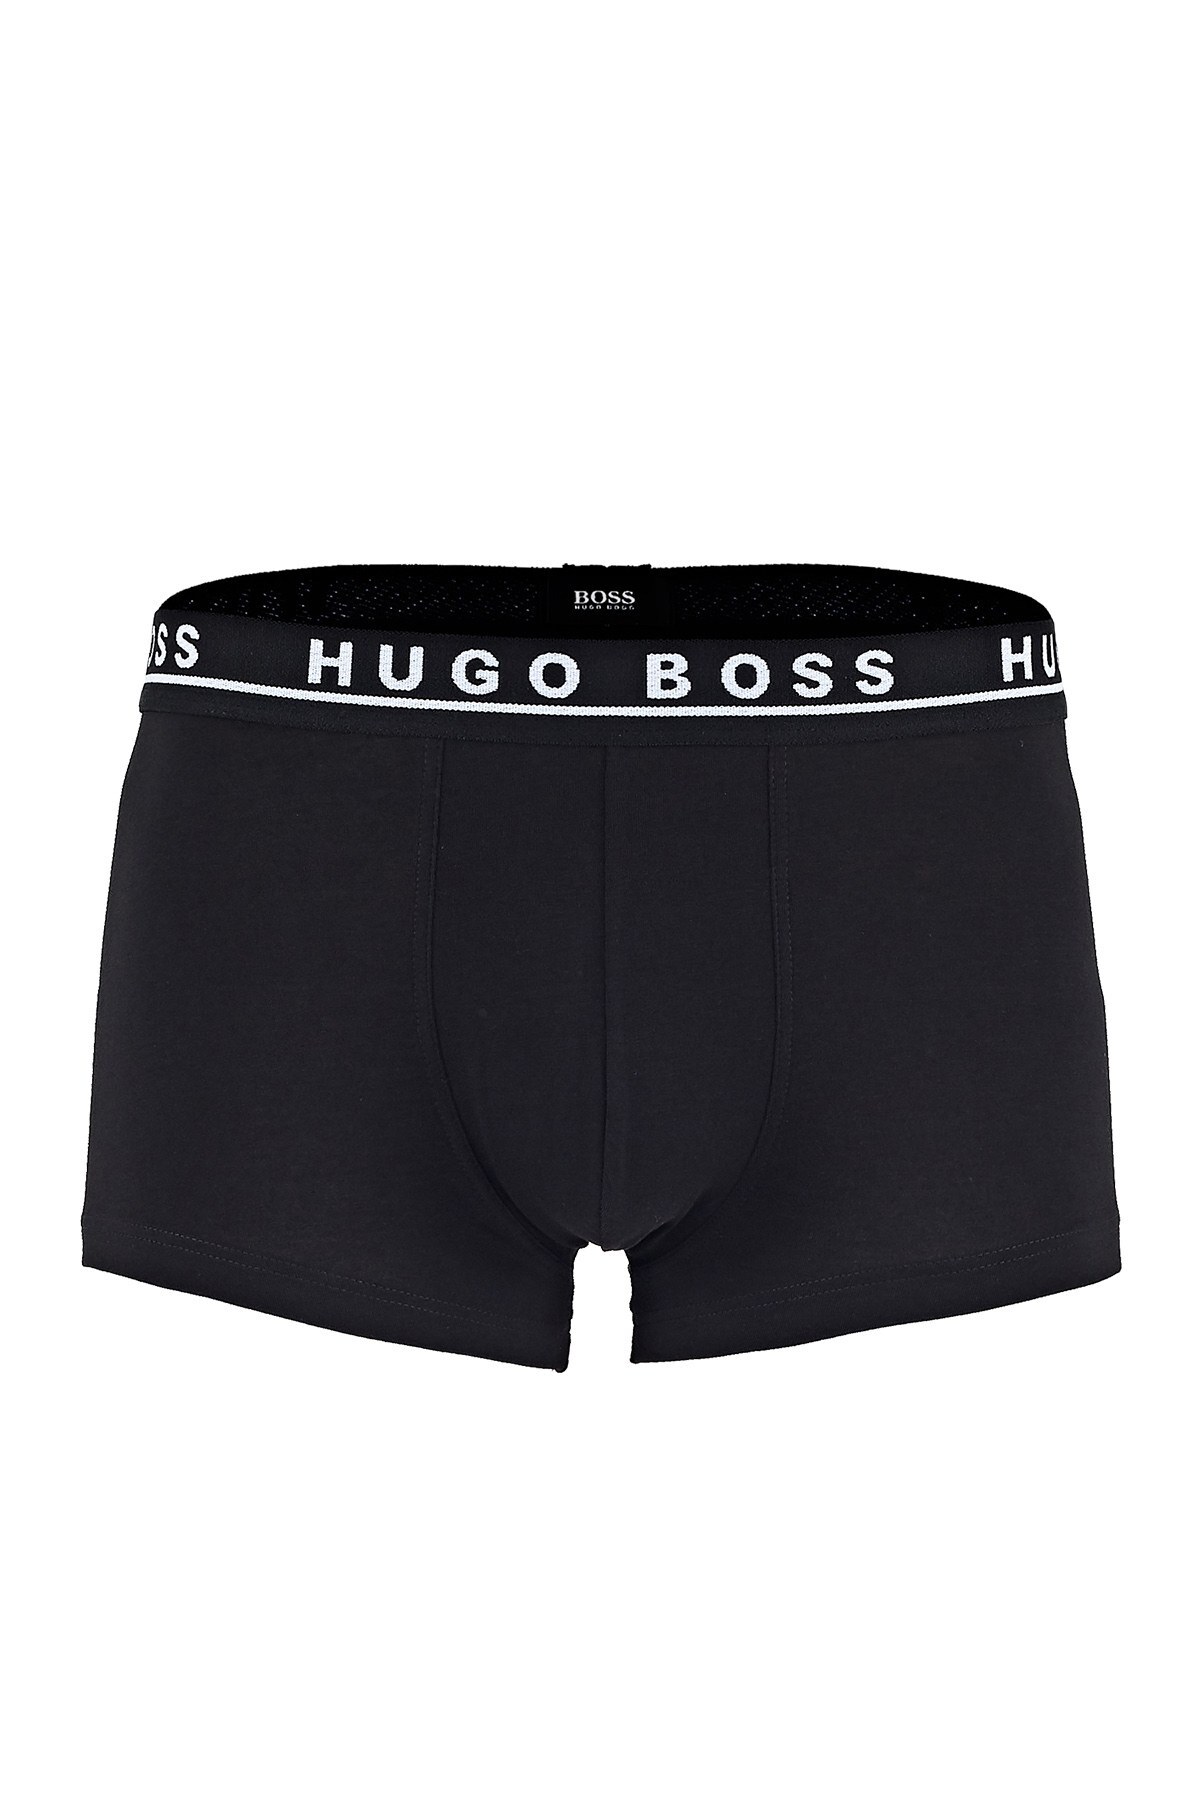 Hugo Boss Pamuklu 3 Pack Erkek Boxer 50325403 061 Koyu Gri-Gri-Siyah